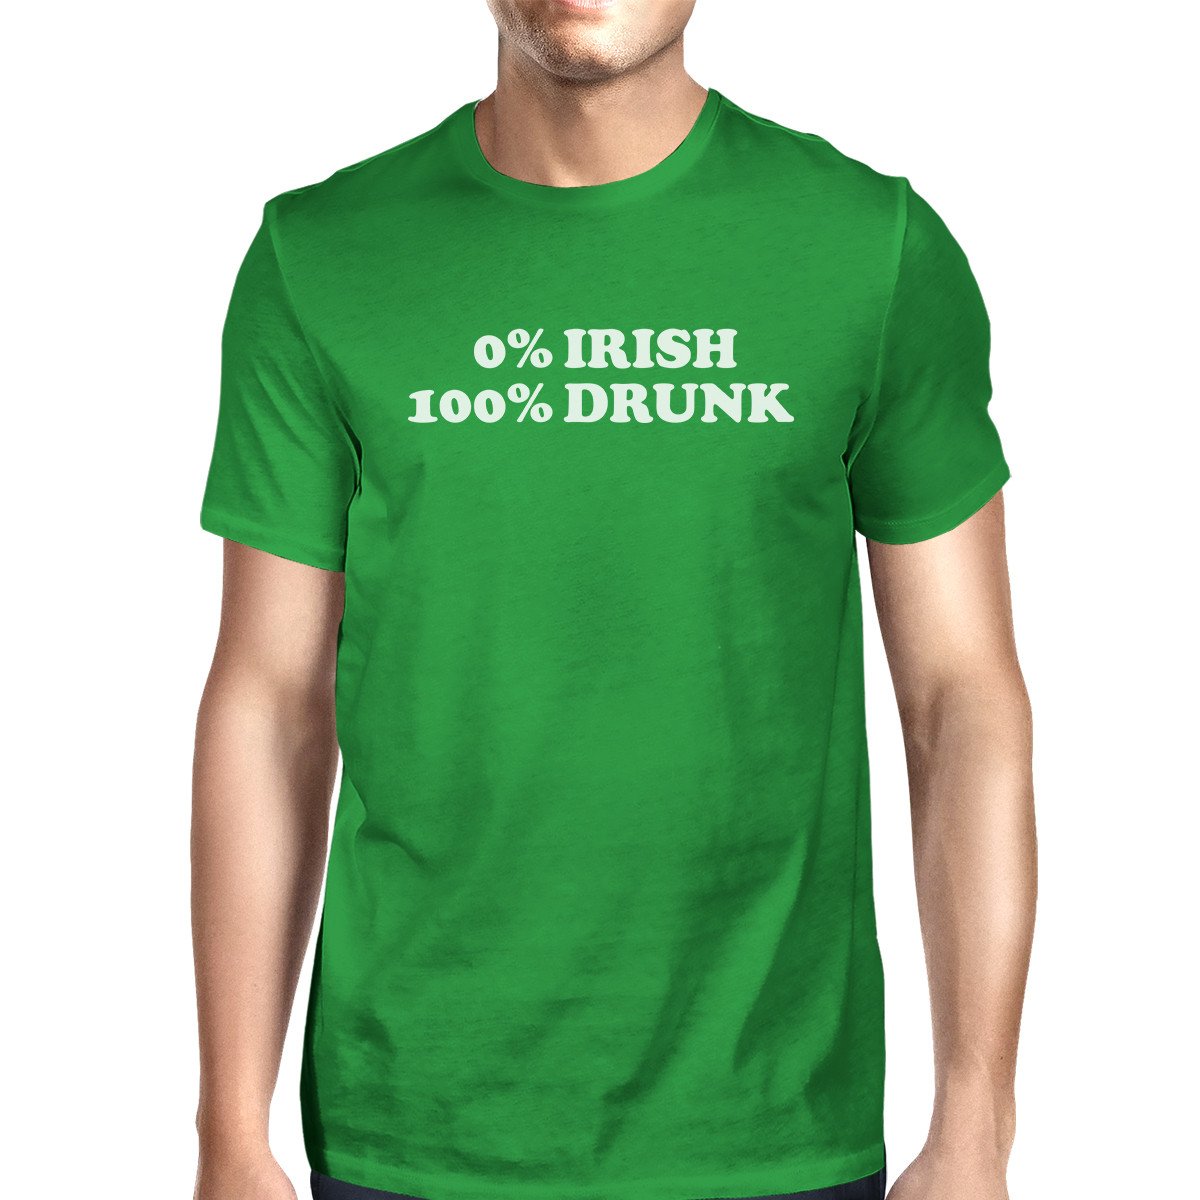 0% Irish 100% Drunk Men's Green T-shirt Hilarious Saying